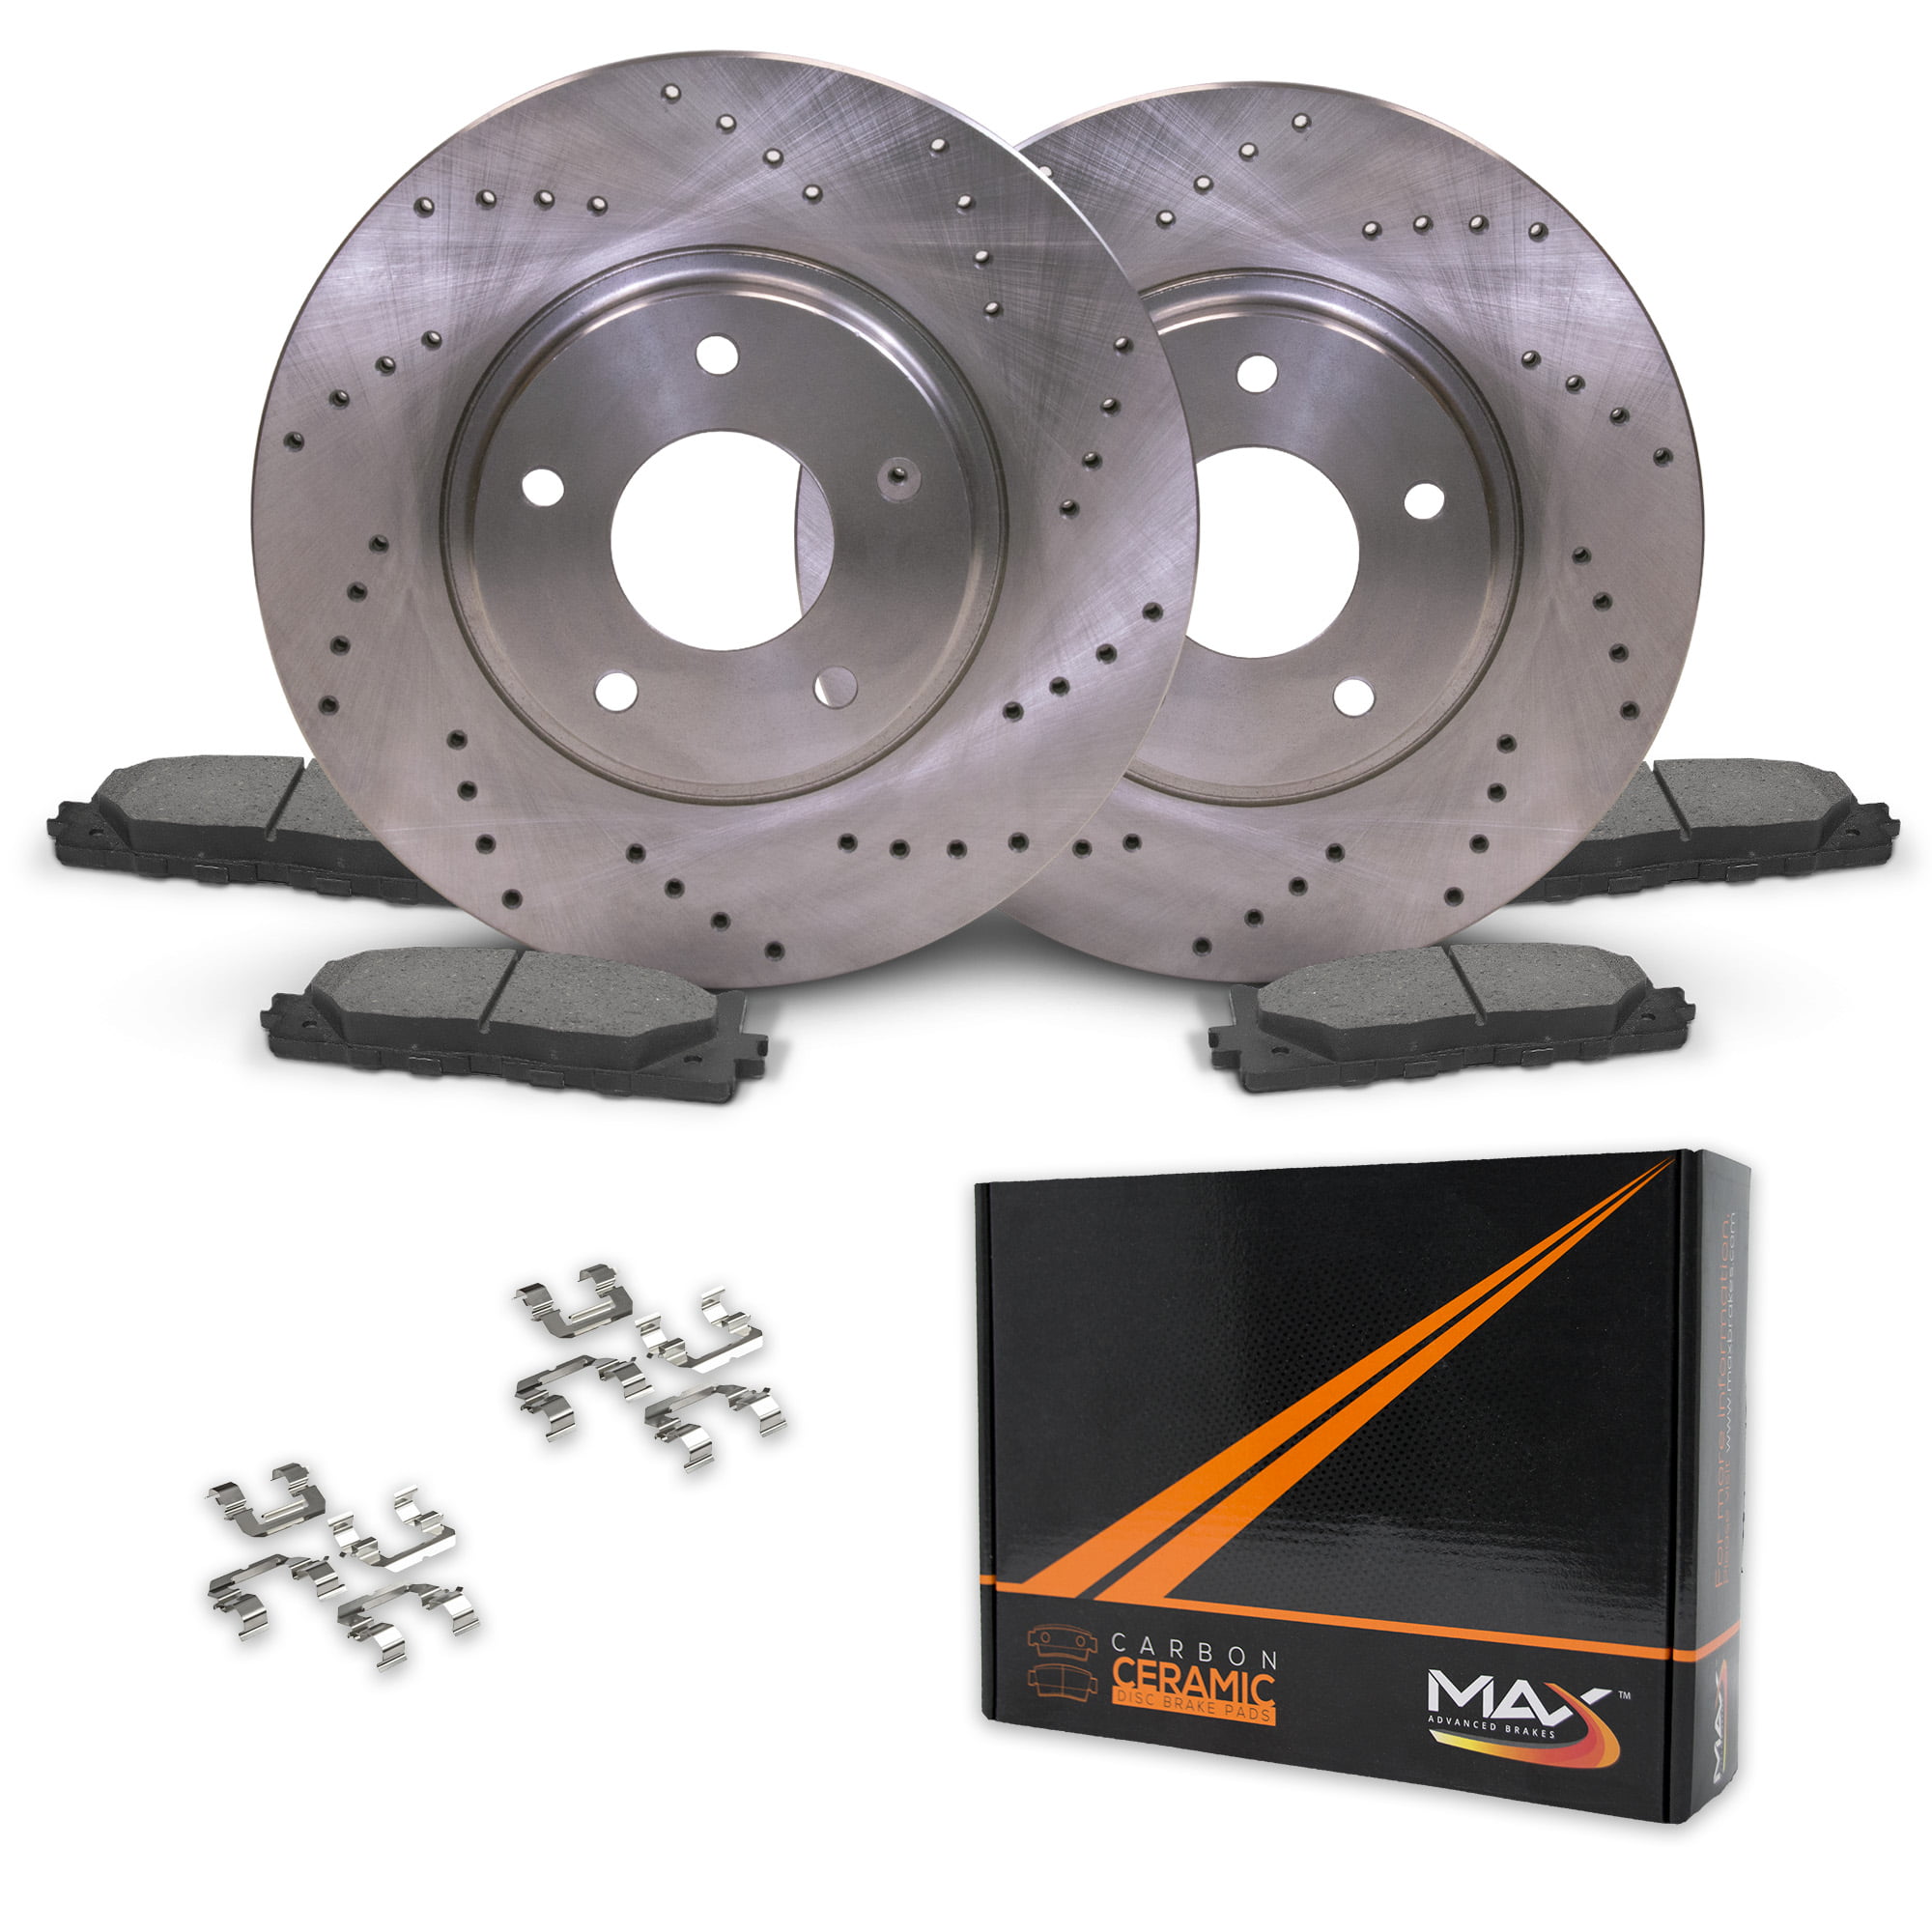 FRONT] Max Brakes PREMIUM XD Carbon Ceramic Pads KT005121 - Max